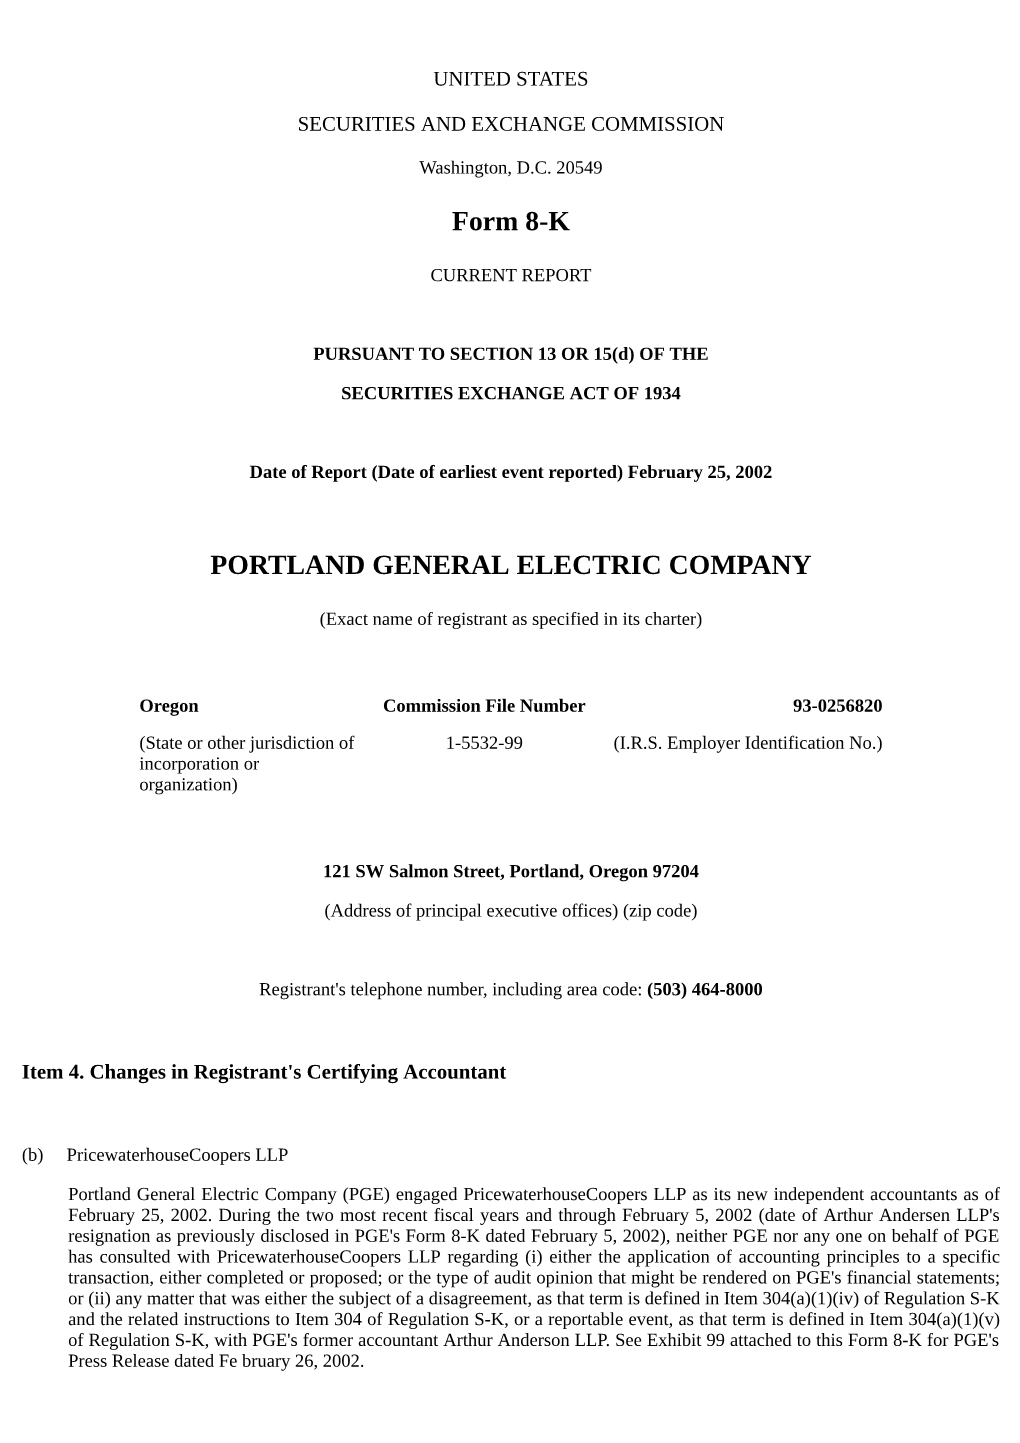 Form 8-K PORTLAND GENERAL ELECTRIC COMPANY